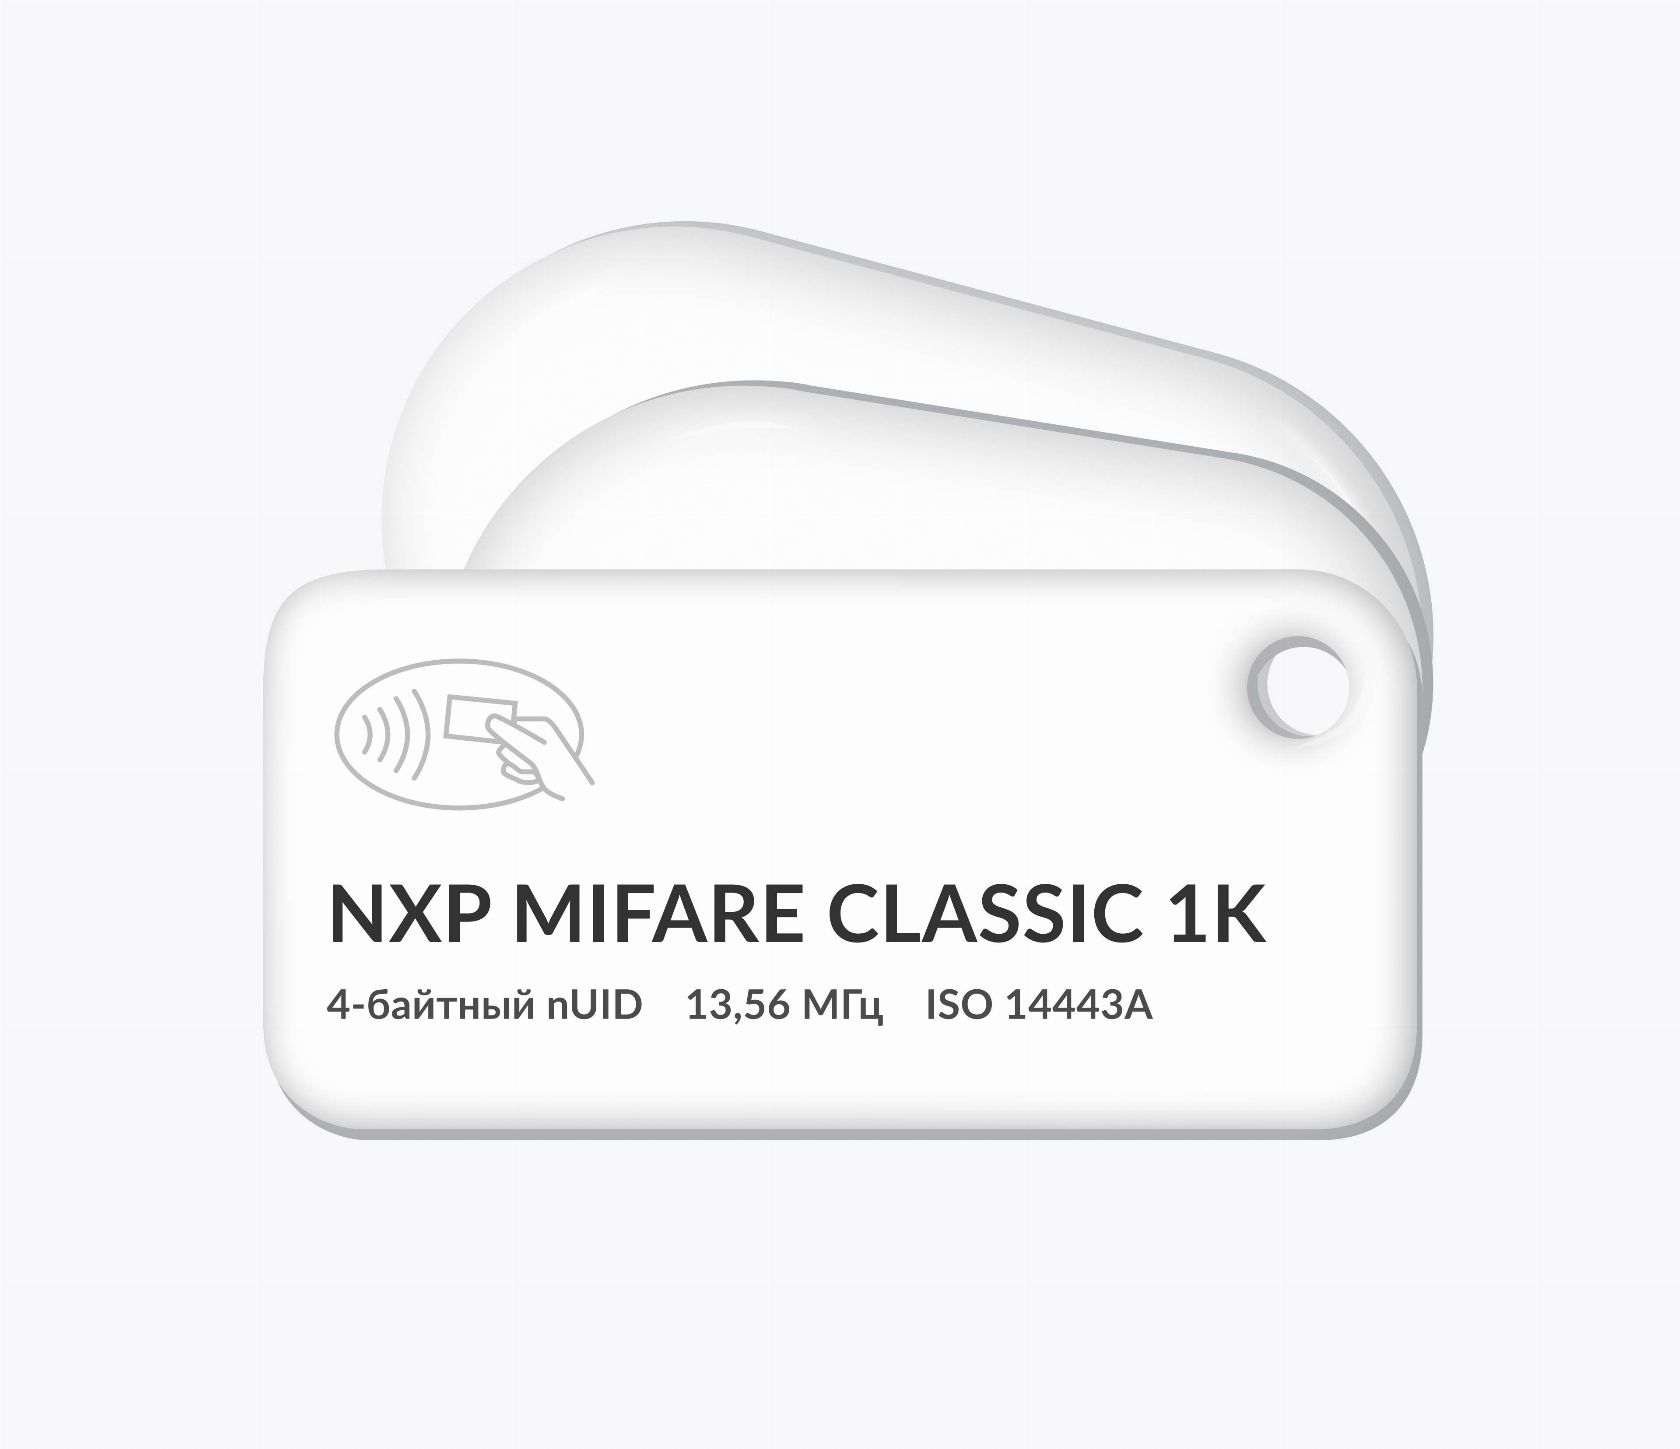 RFID-брелоки с чипом NXP MIFARE Classic 1k 4 byte nUID и вашим логотипом RFID-брелоки NEOKEY® с чипом NXP MIFARE Classic 1k 4 byte nUID и вашим логотипом